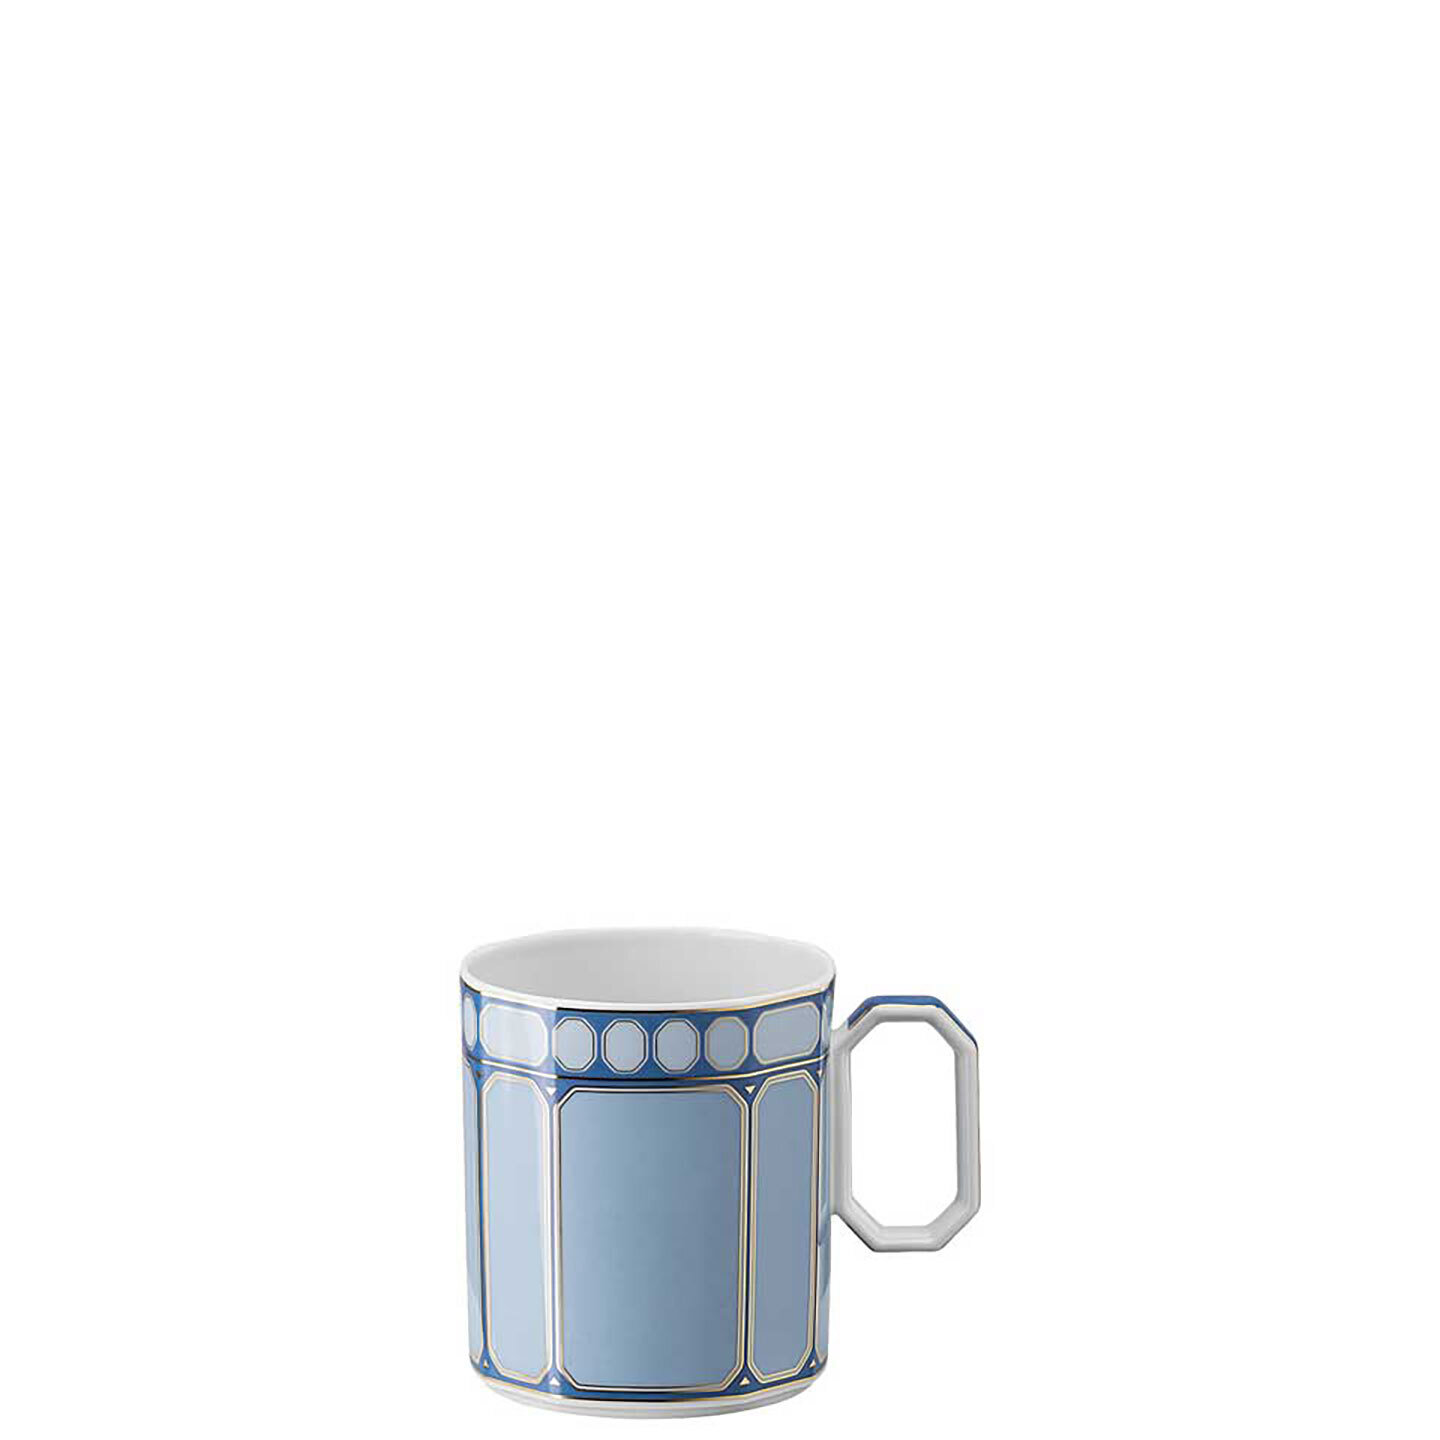 Rosenthal Swarovski Signum Mug 13 oz Azure Blue 10570-426351-15505